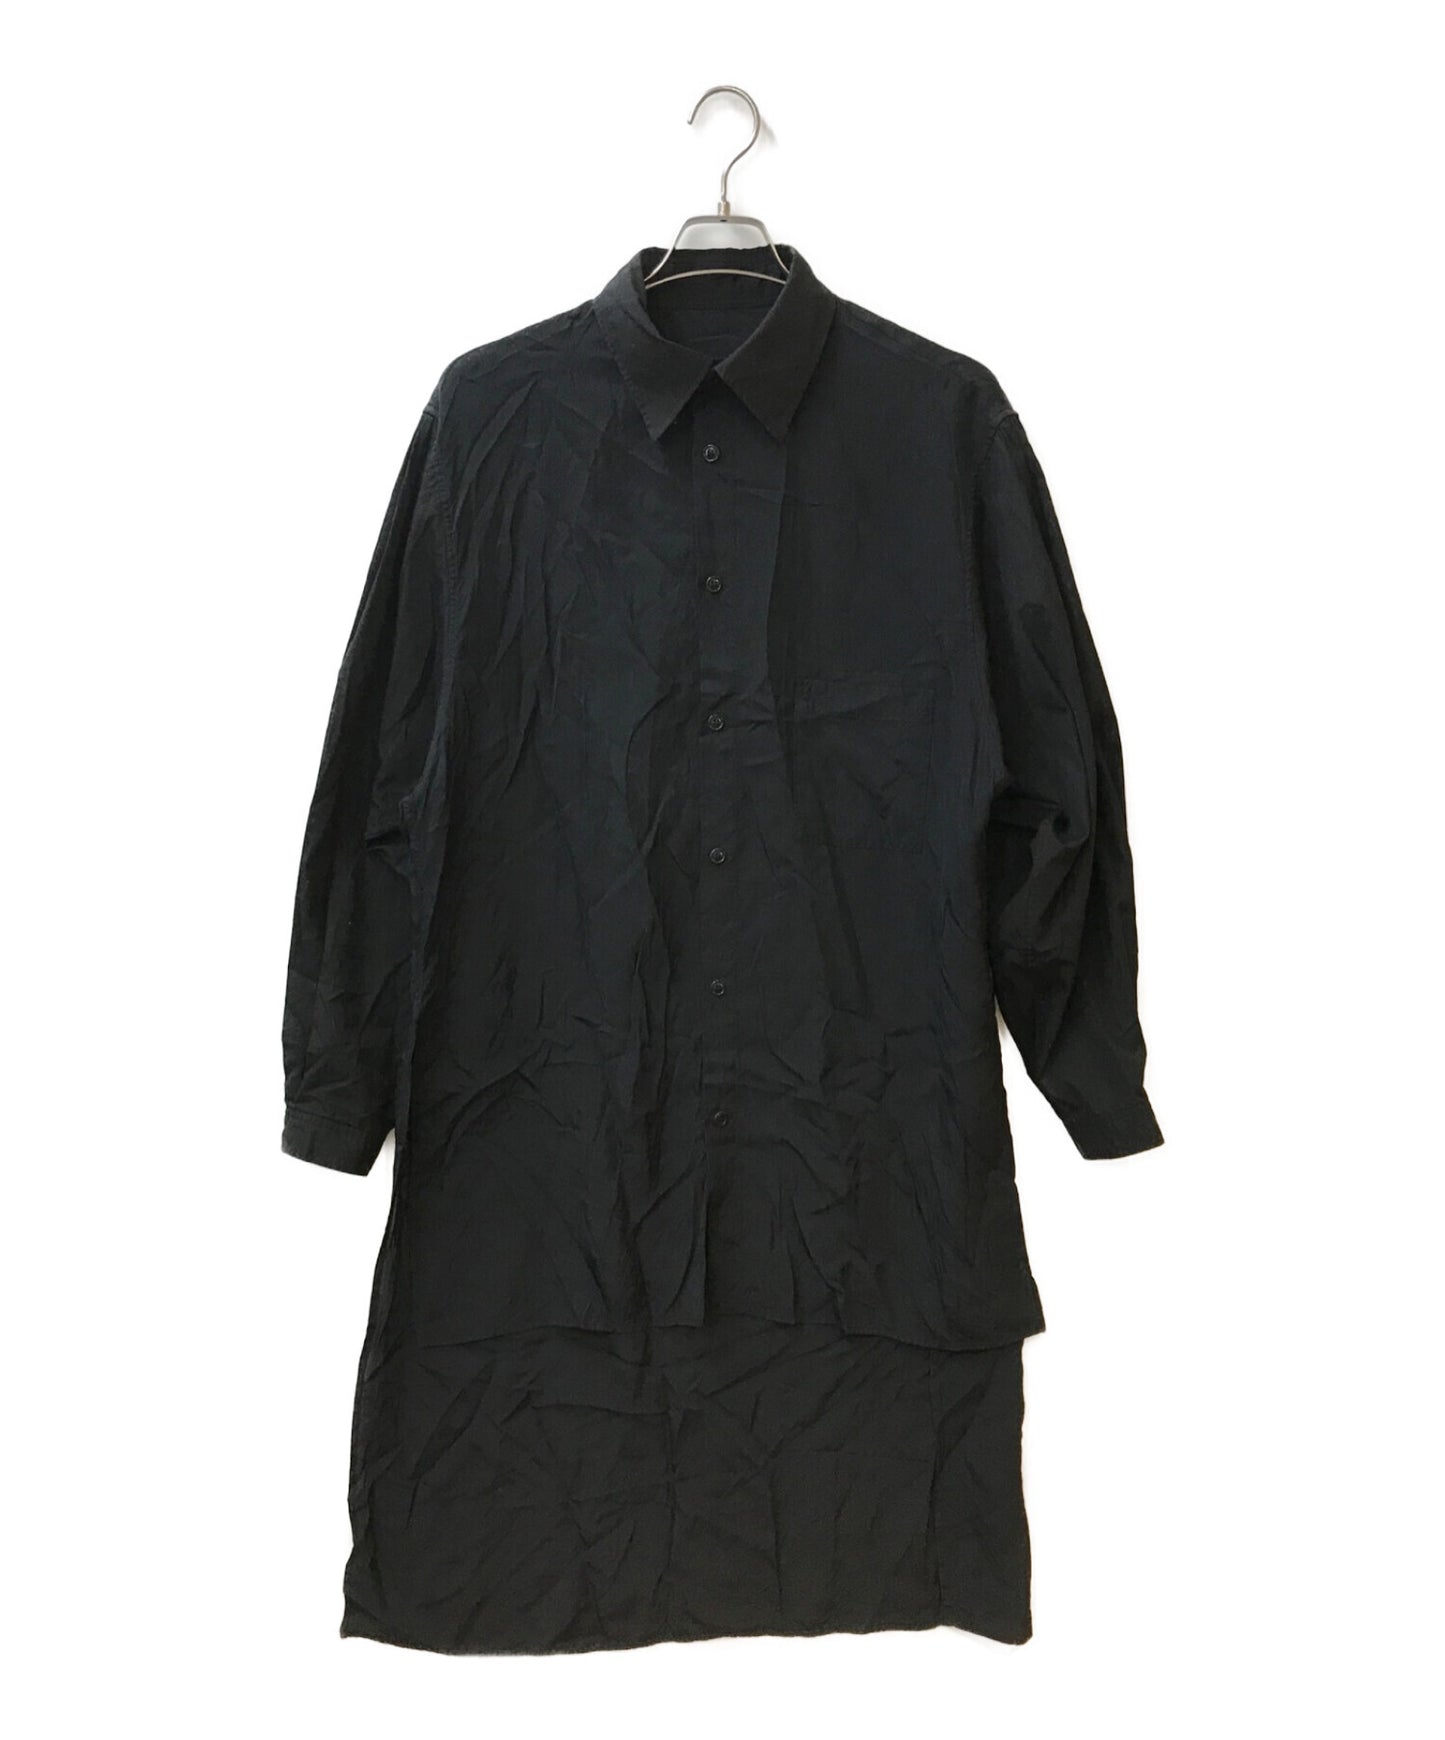 Yohji Yamamoto pour homme Cupro Staff Shirt HW-B08-212